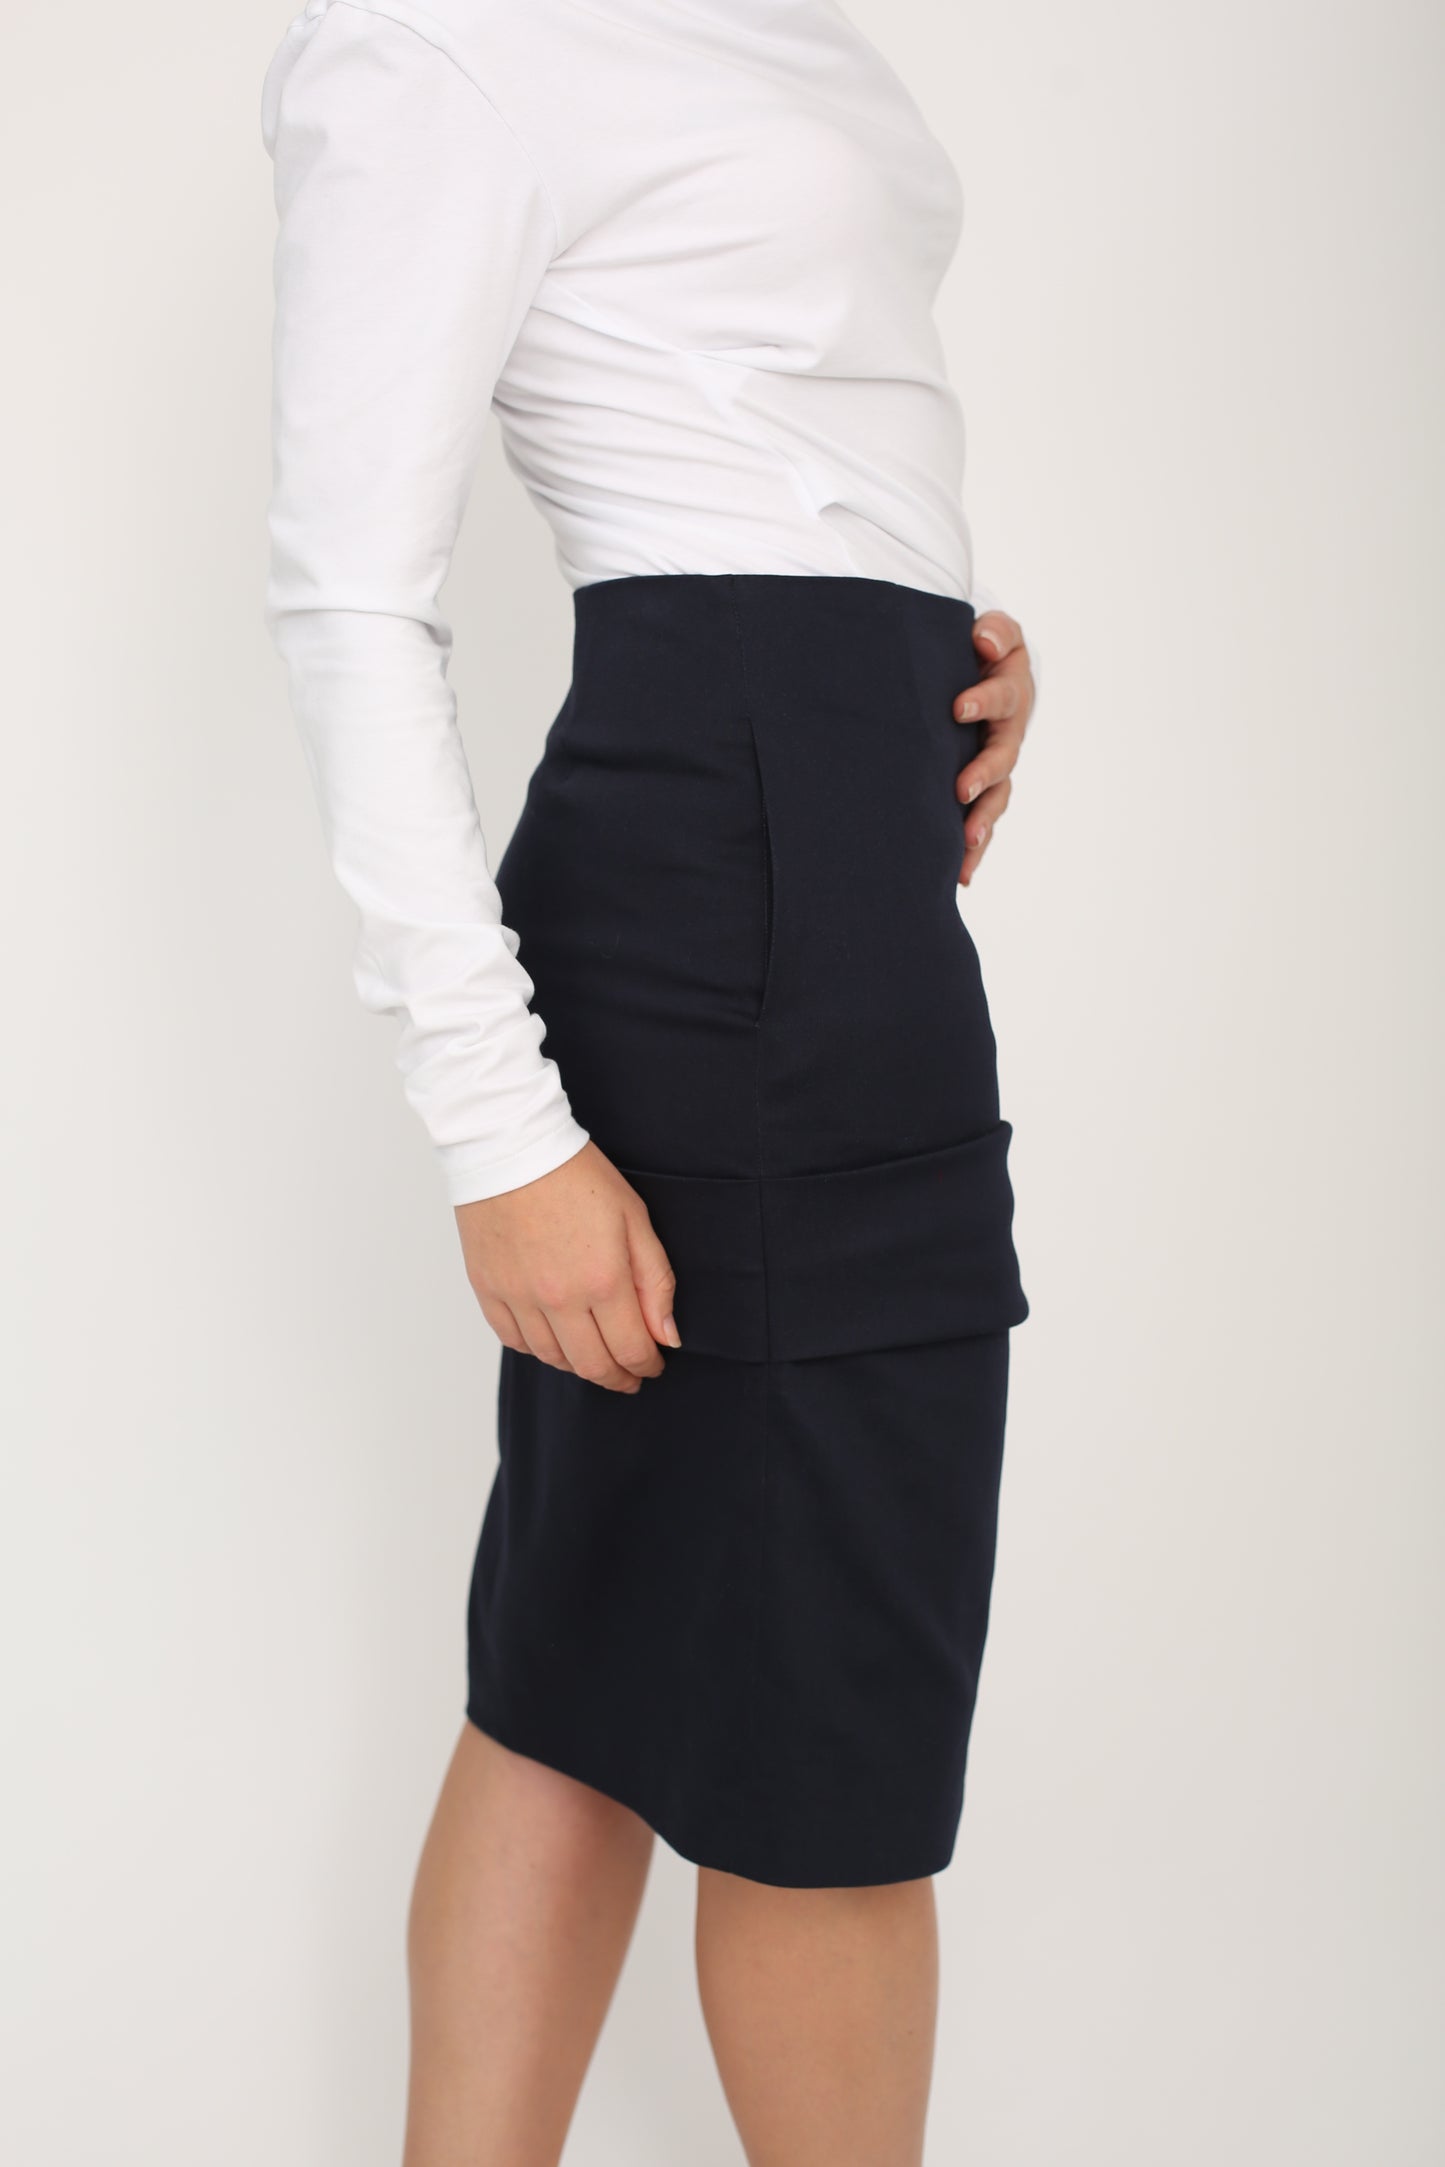 Pensil Rouged skirt,Office wear,Work skirt with strech.